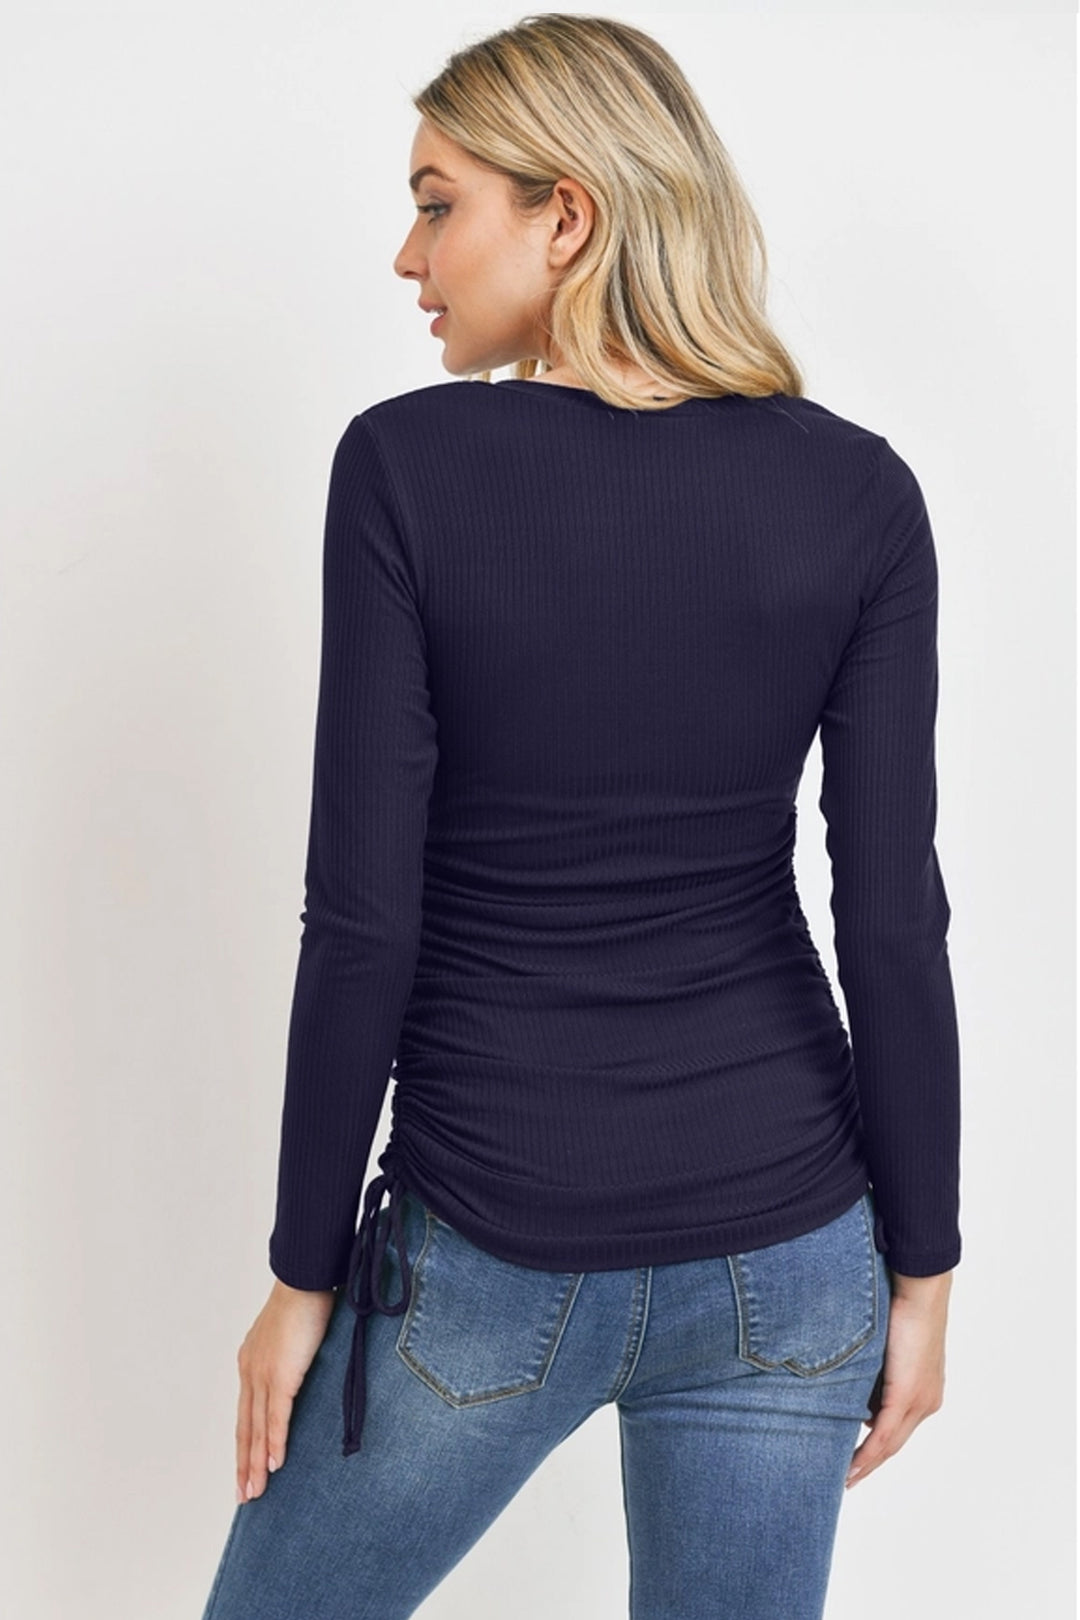 Adjustable sweater - Navy blue